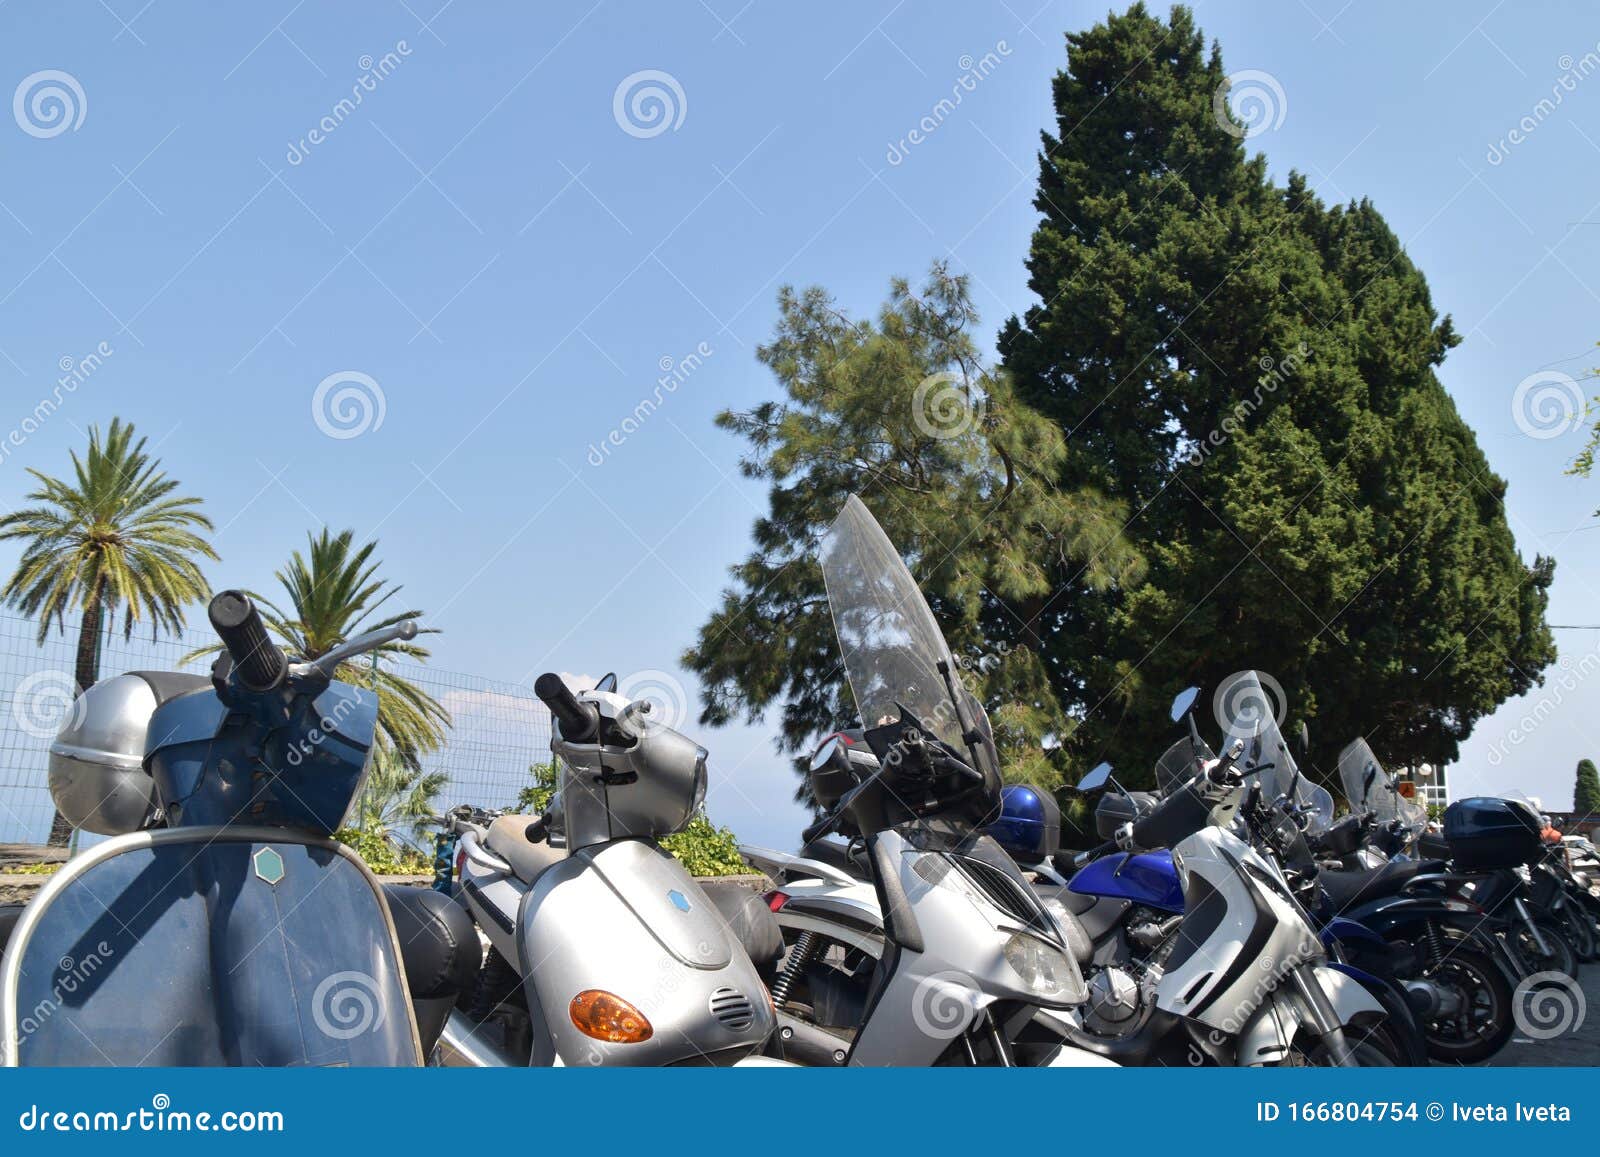 motocycle motobike taormina italy sicilia